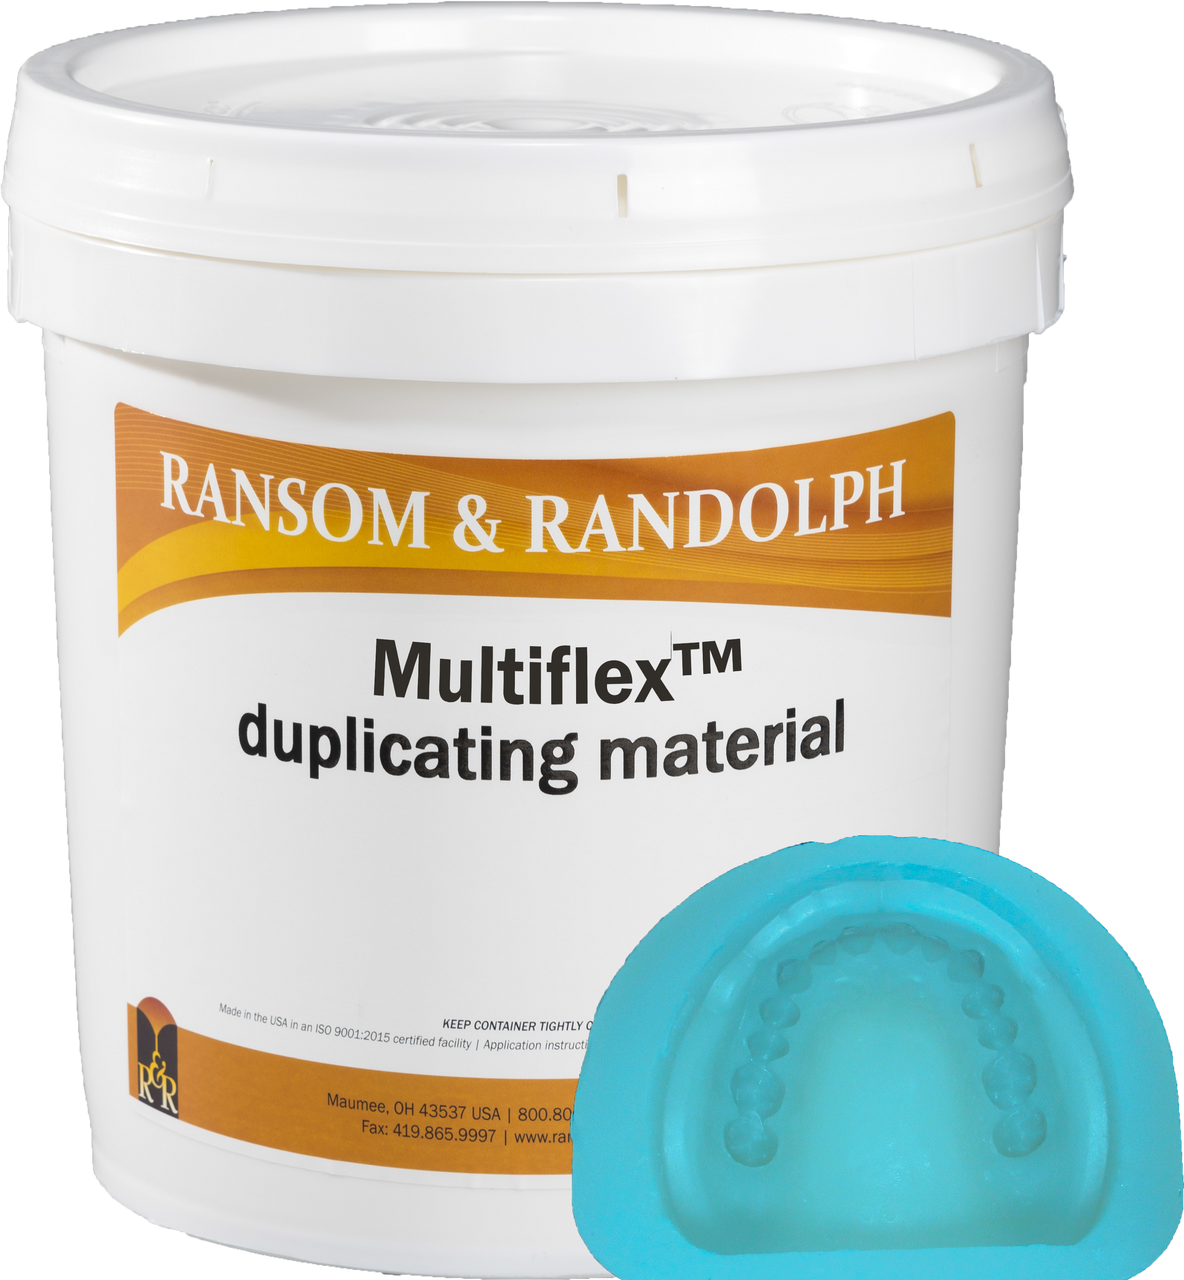 Multiflex™ Blue duplicating material